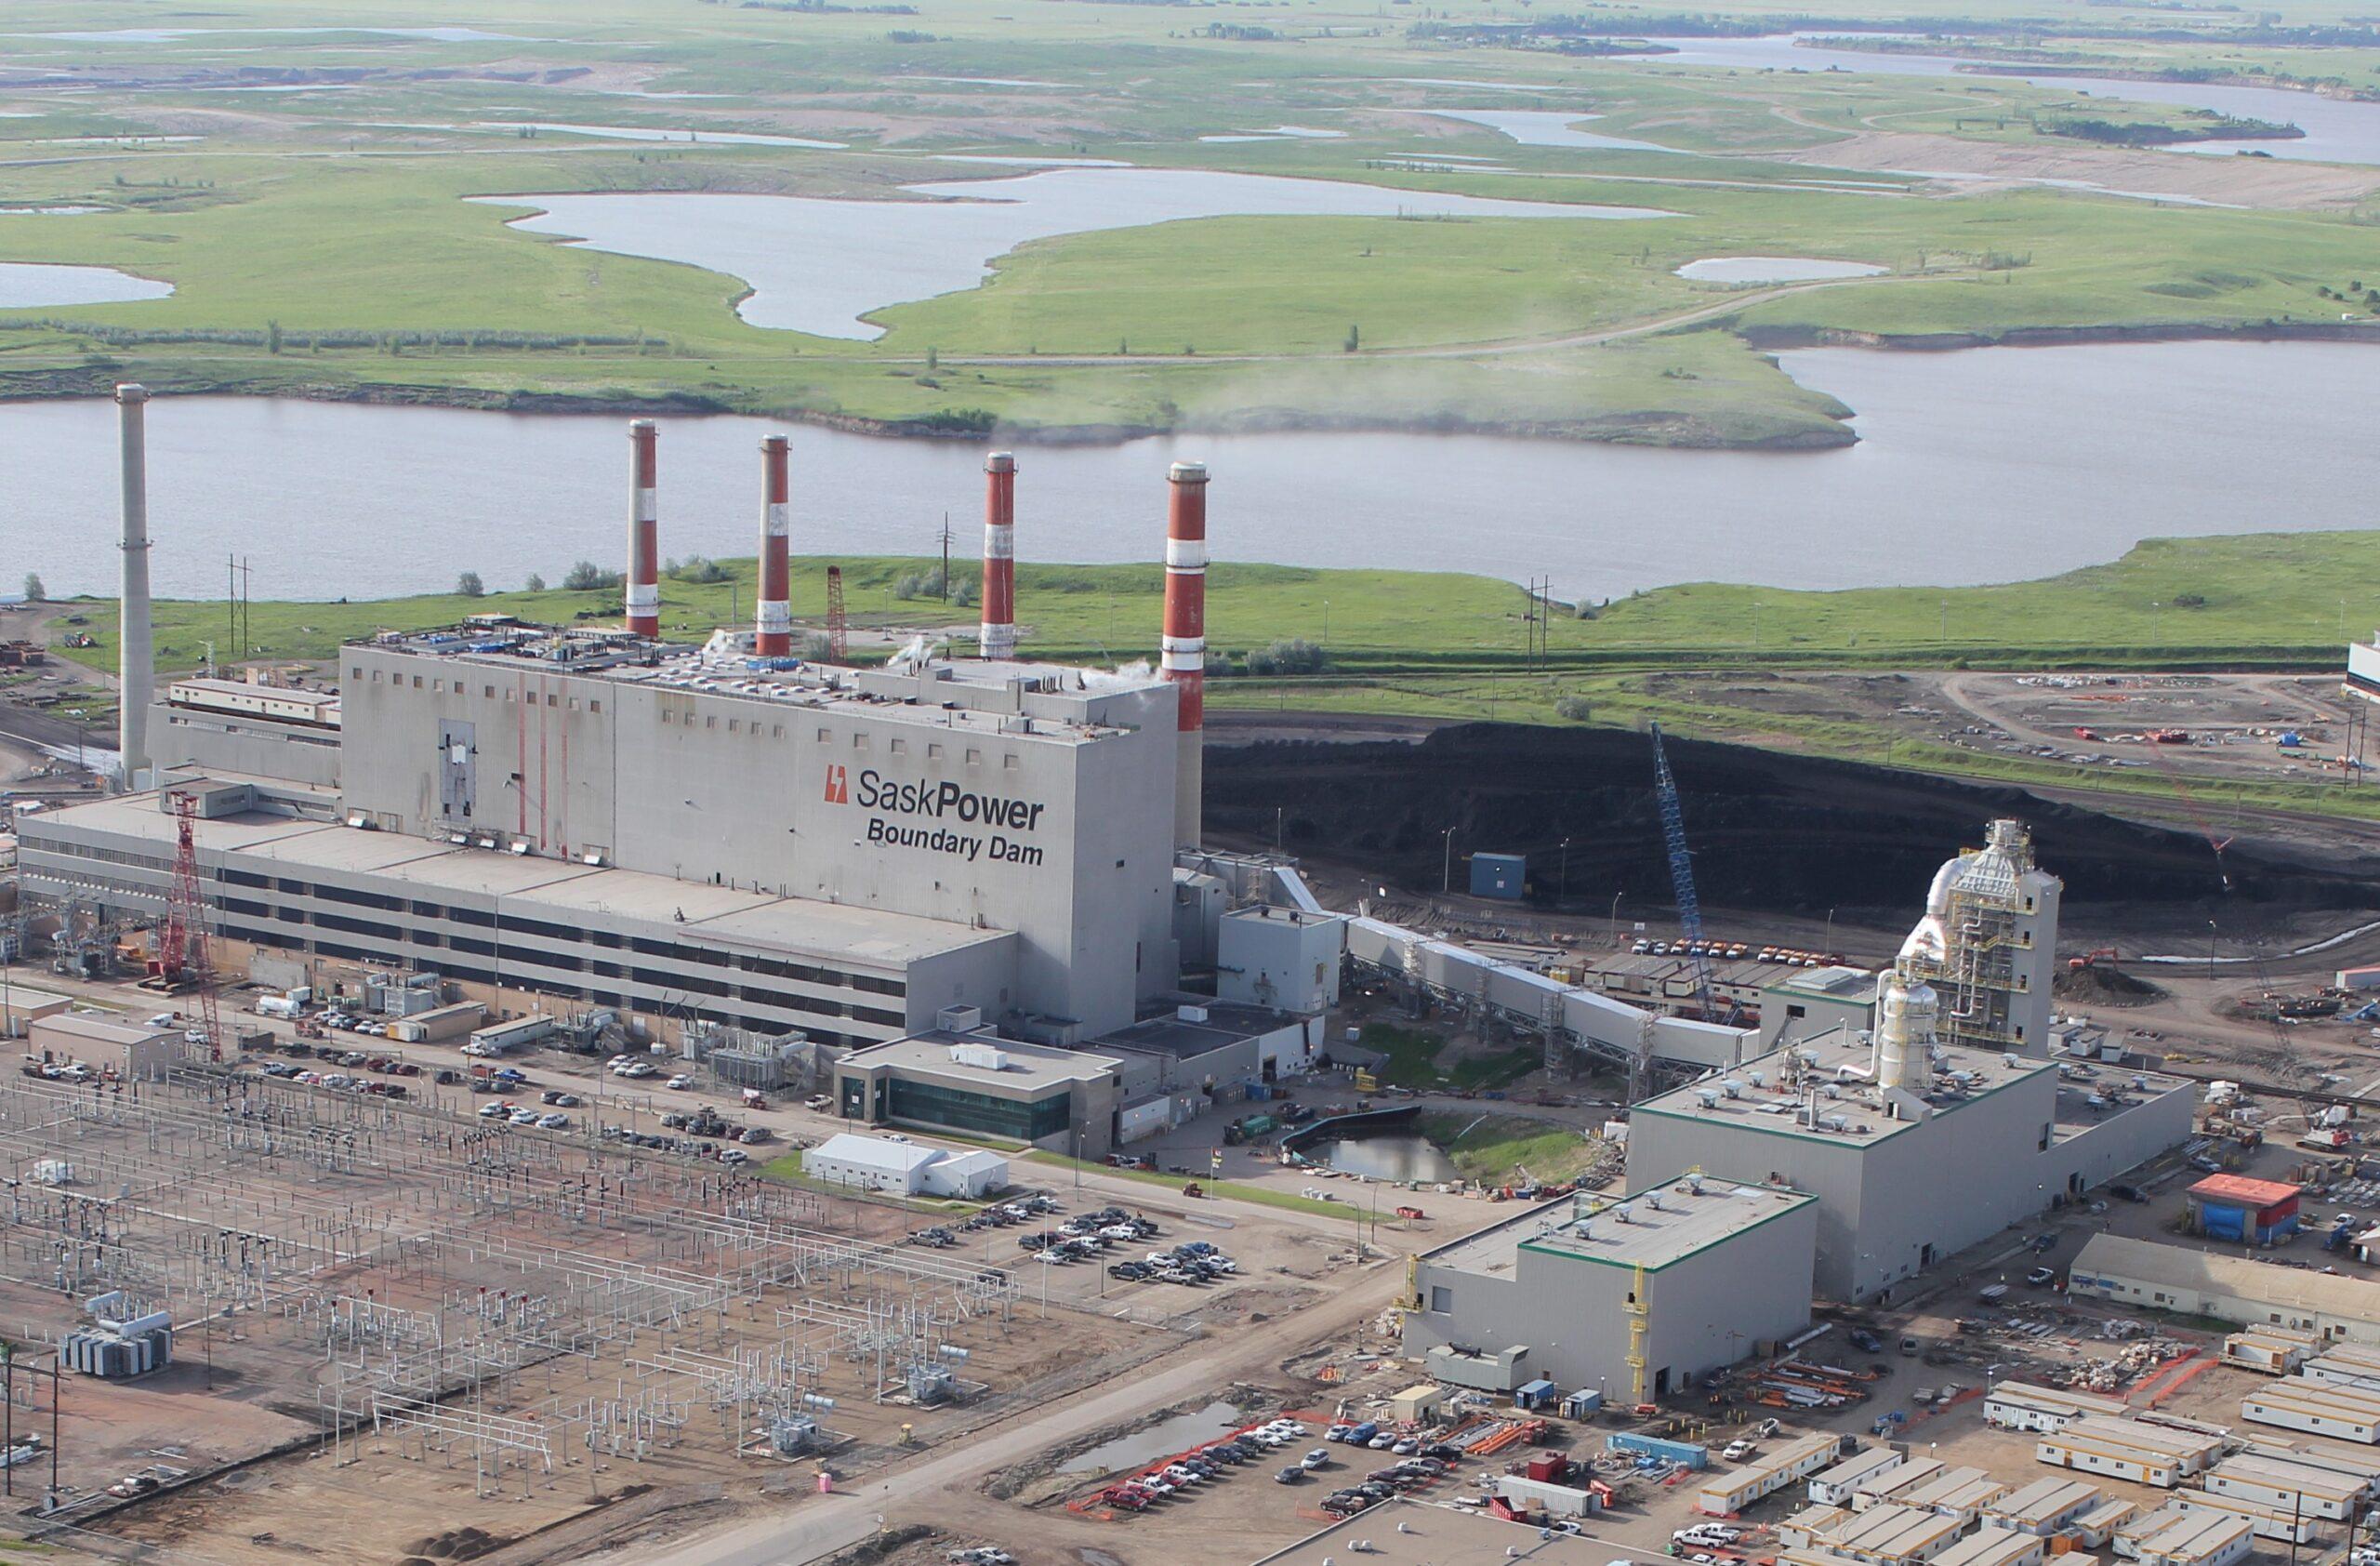 Canada's Boundary Dam CCS plant in Saskatchewan